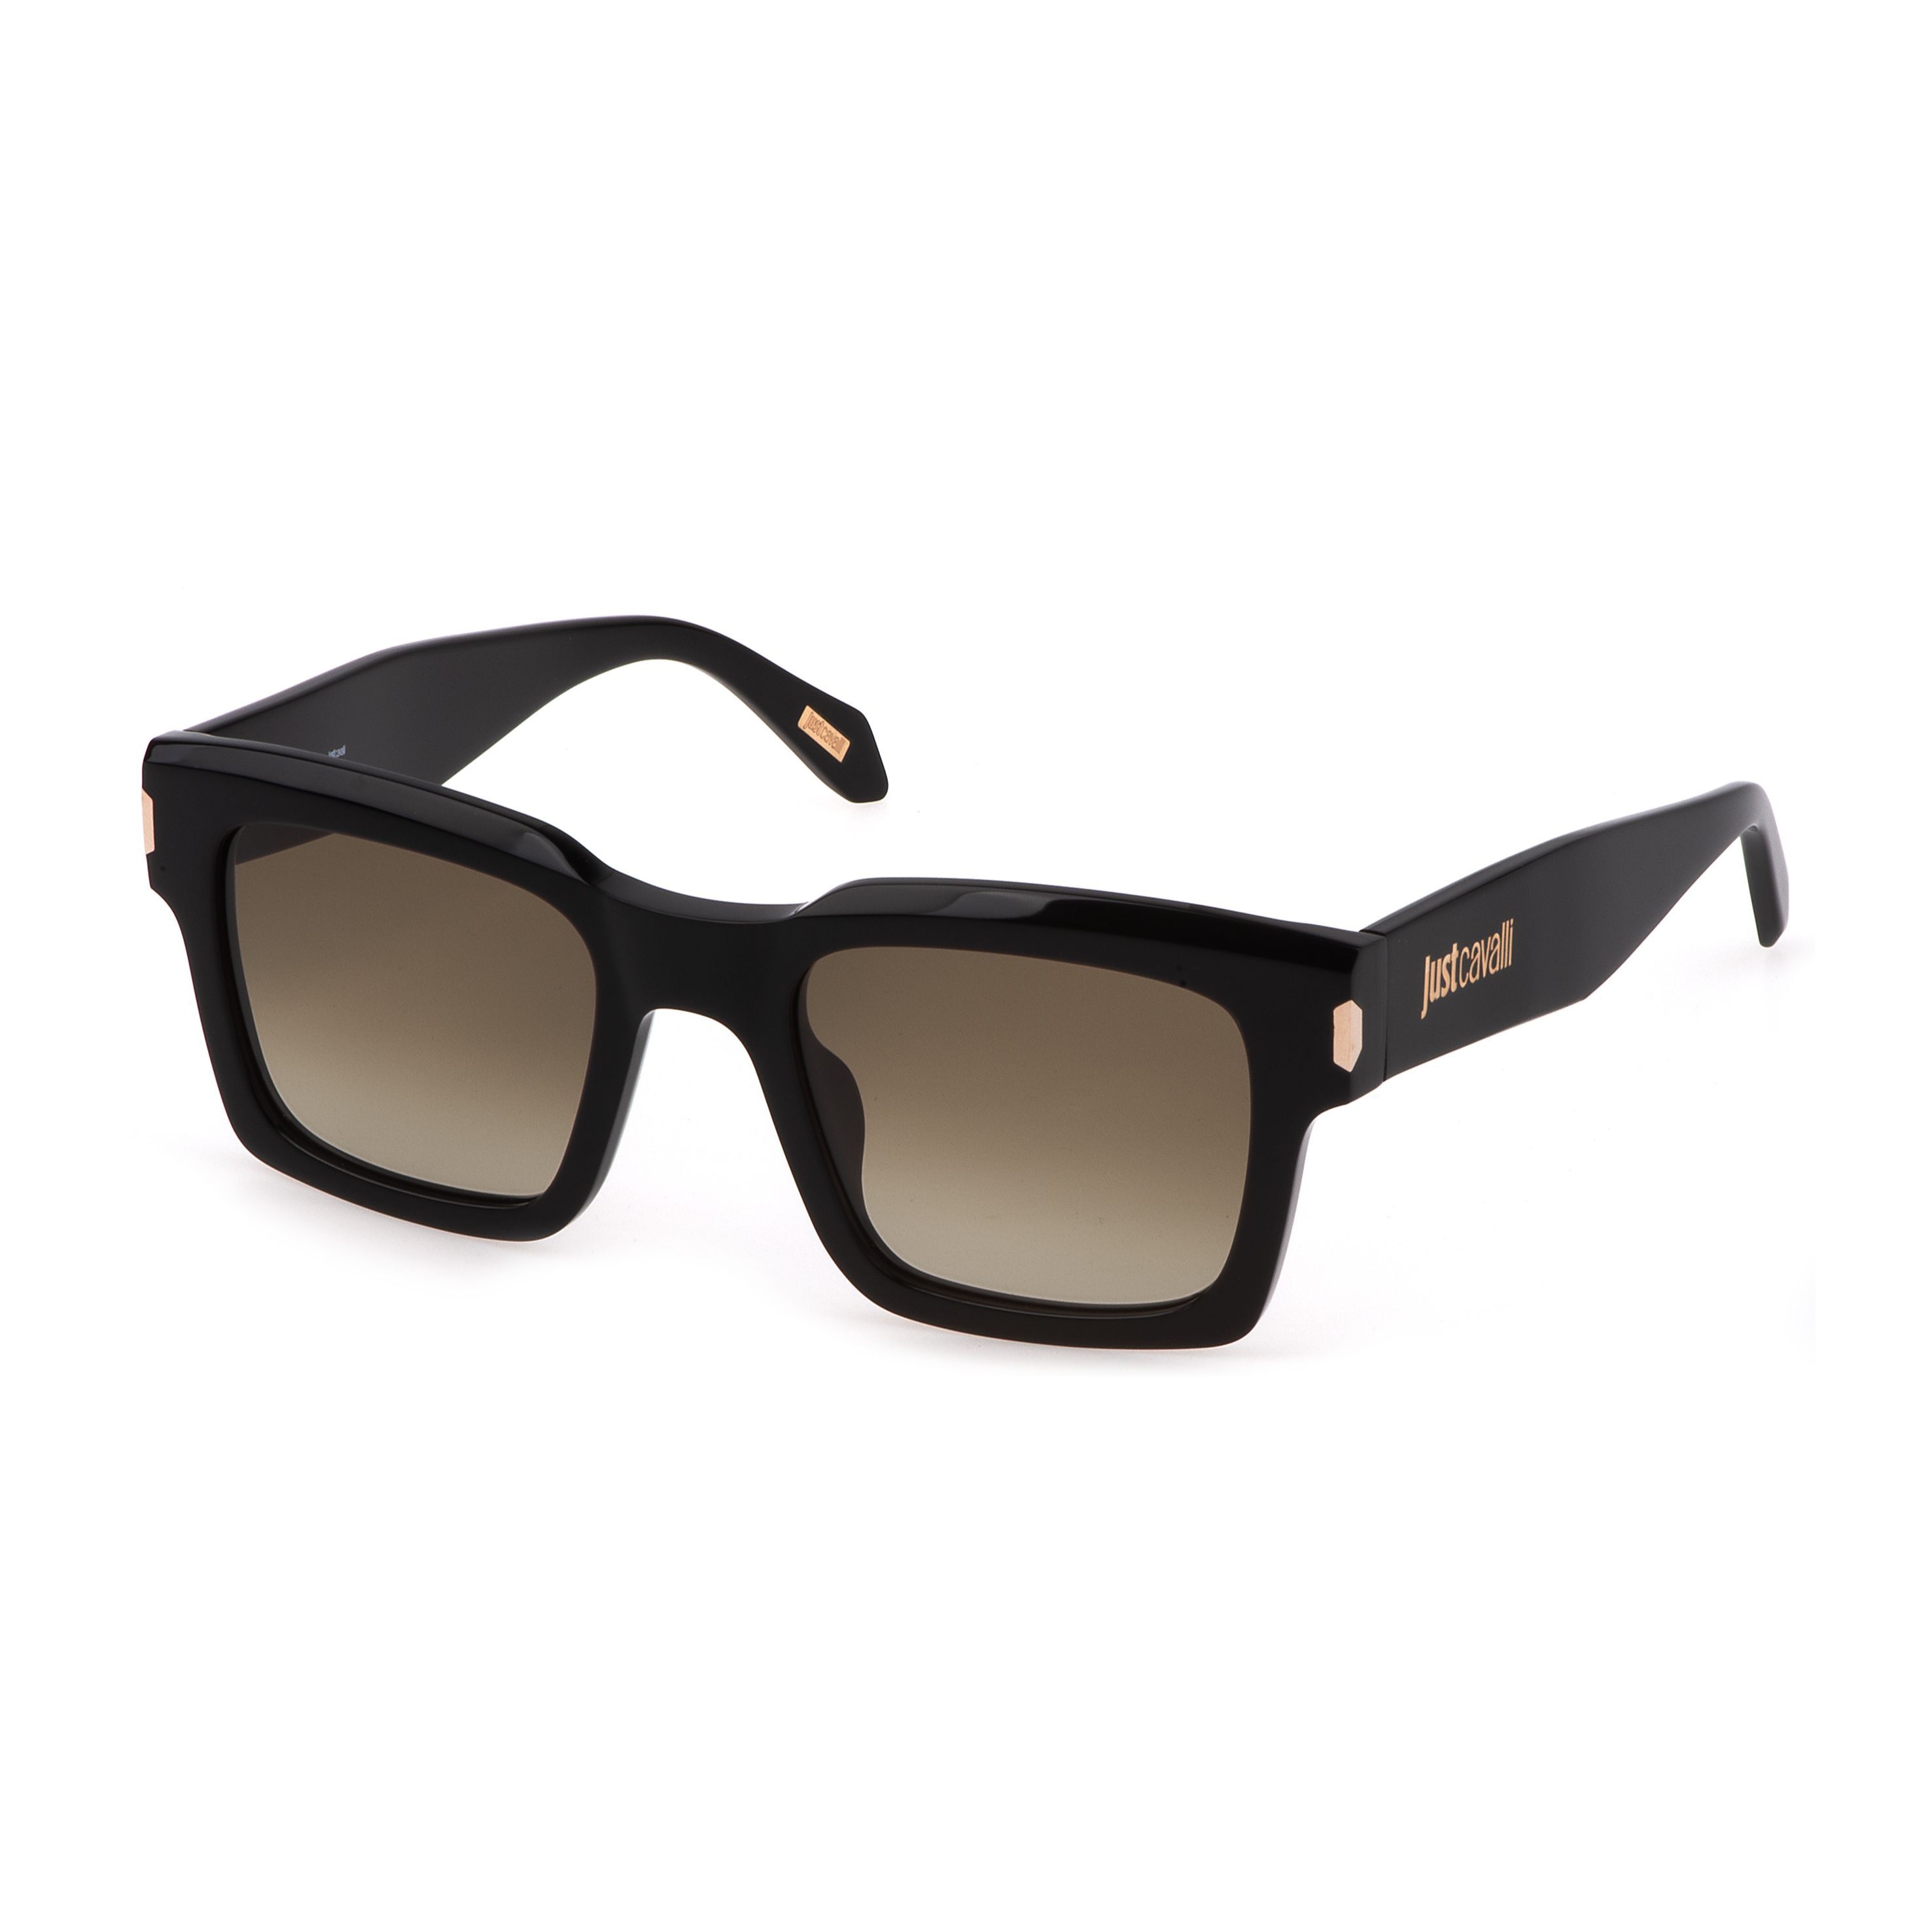 SJC026 Square Sunglasses 700 - size 52